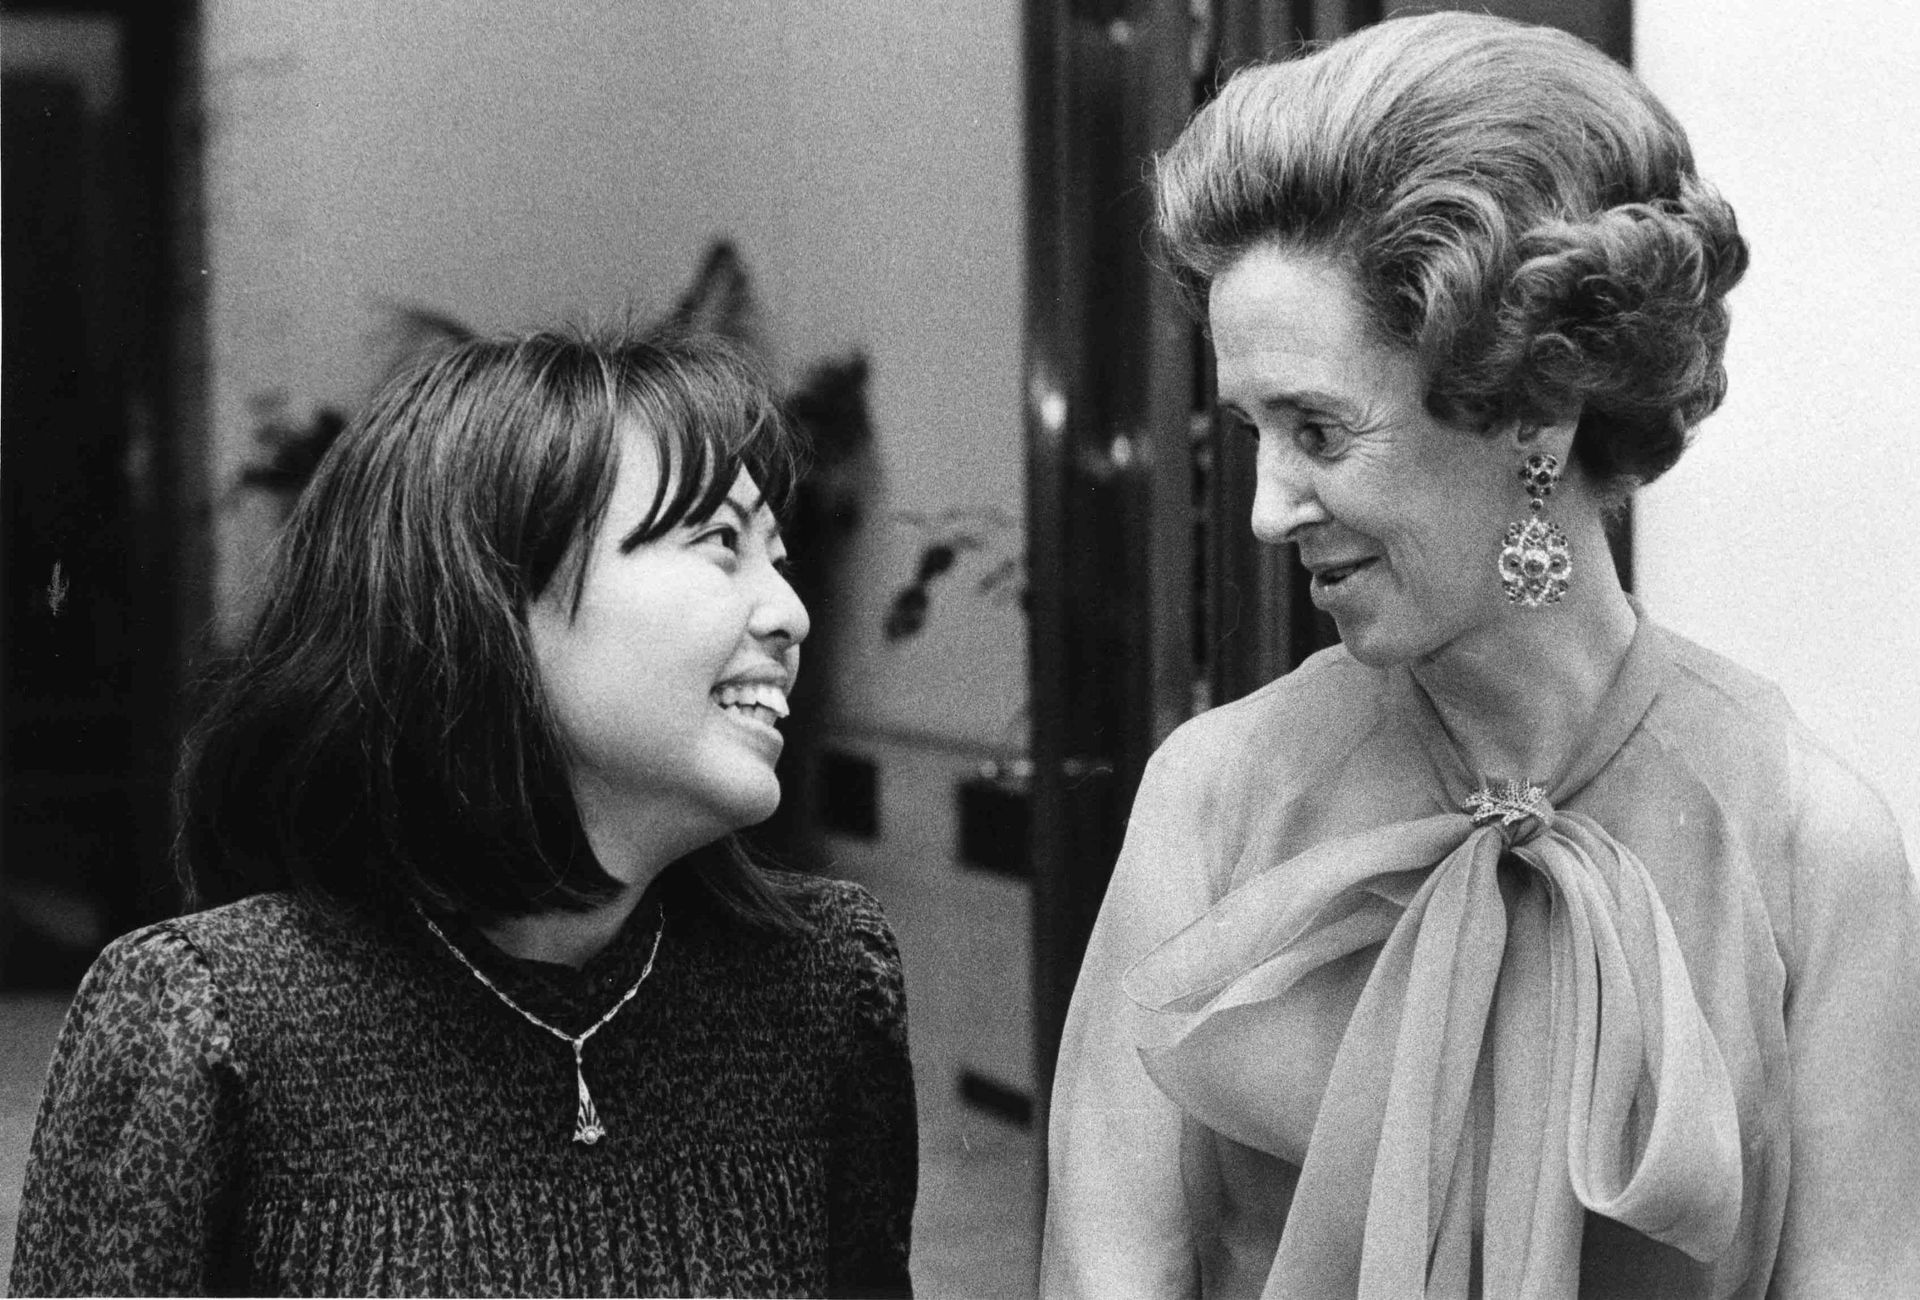 Yuzuko Horigome, 1ère lauréate du Concours Reine Elisabeth 1980, en compagnie de la Reine Fabiola